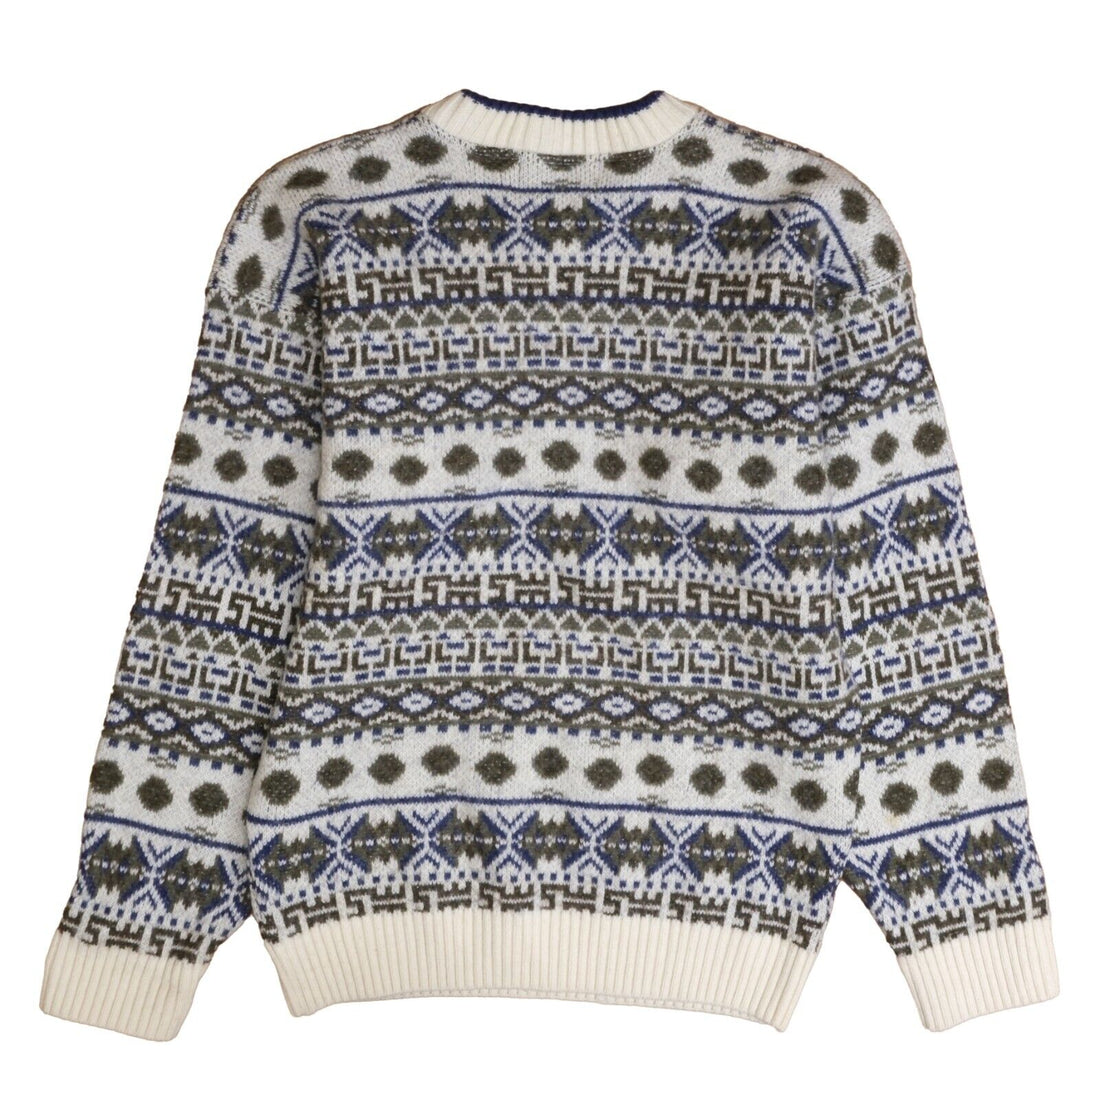 Vintage Tundra Wool Knit Crewneck Sweater Size Small Pullover Fair Isle